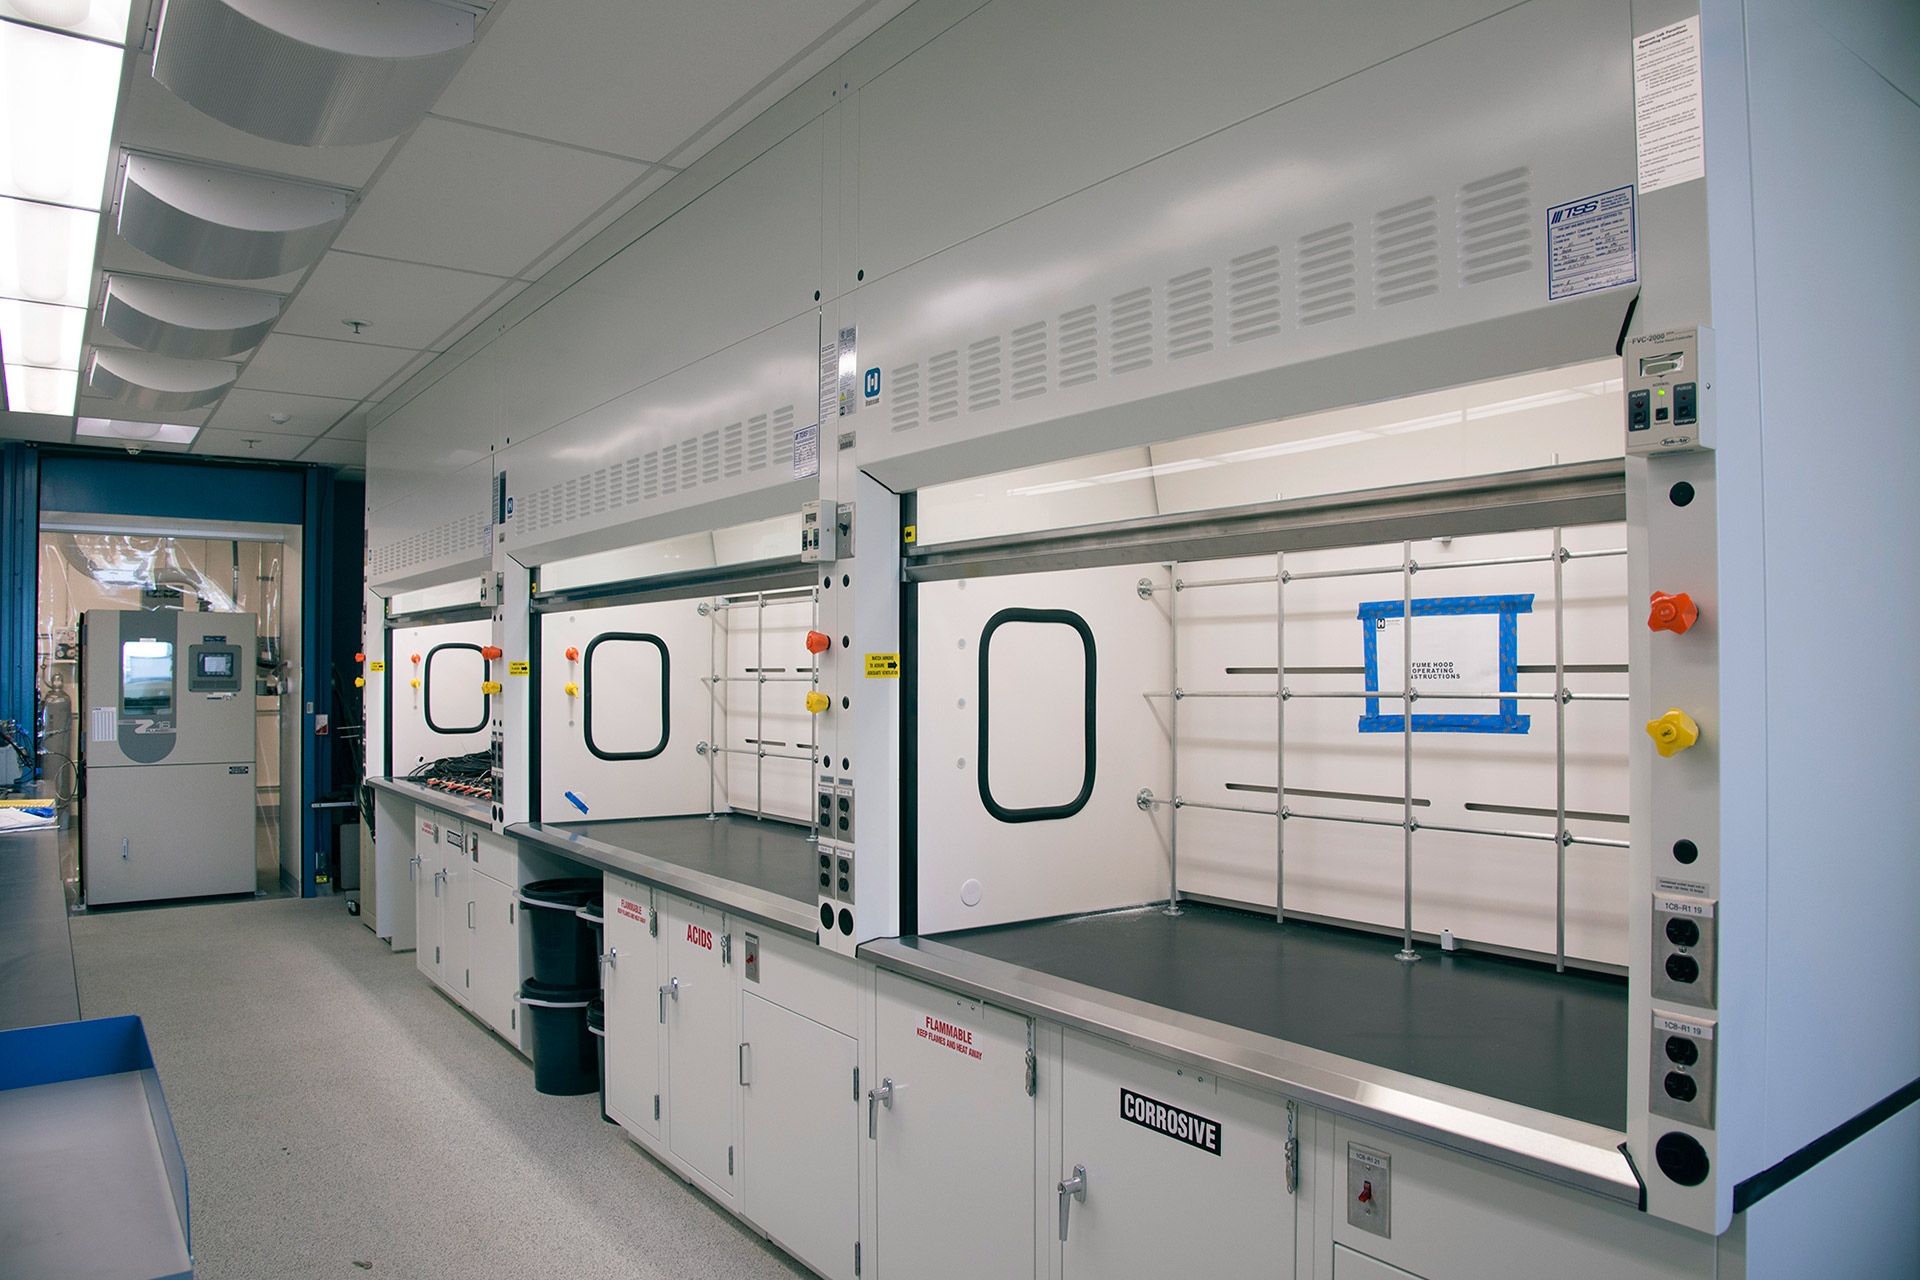 Interior at Lockheed Martin B245 advanced technology facility, lab space